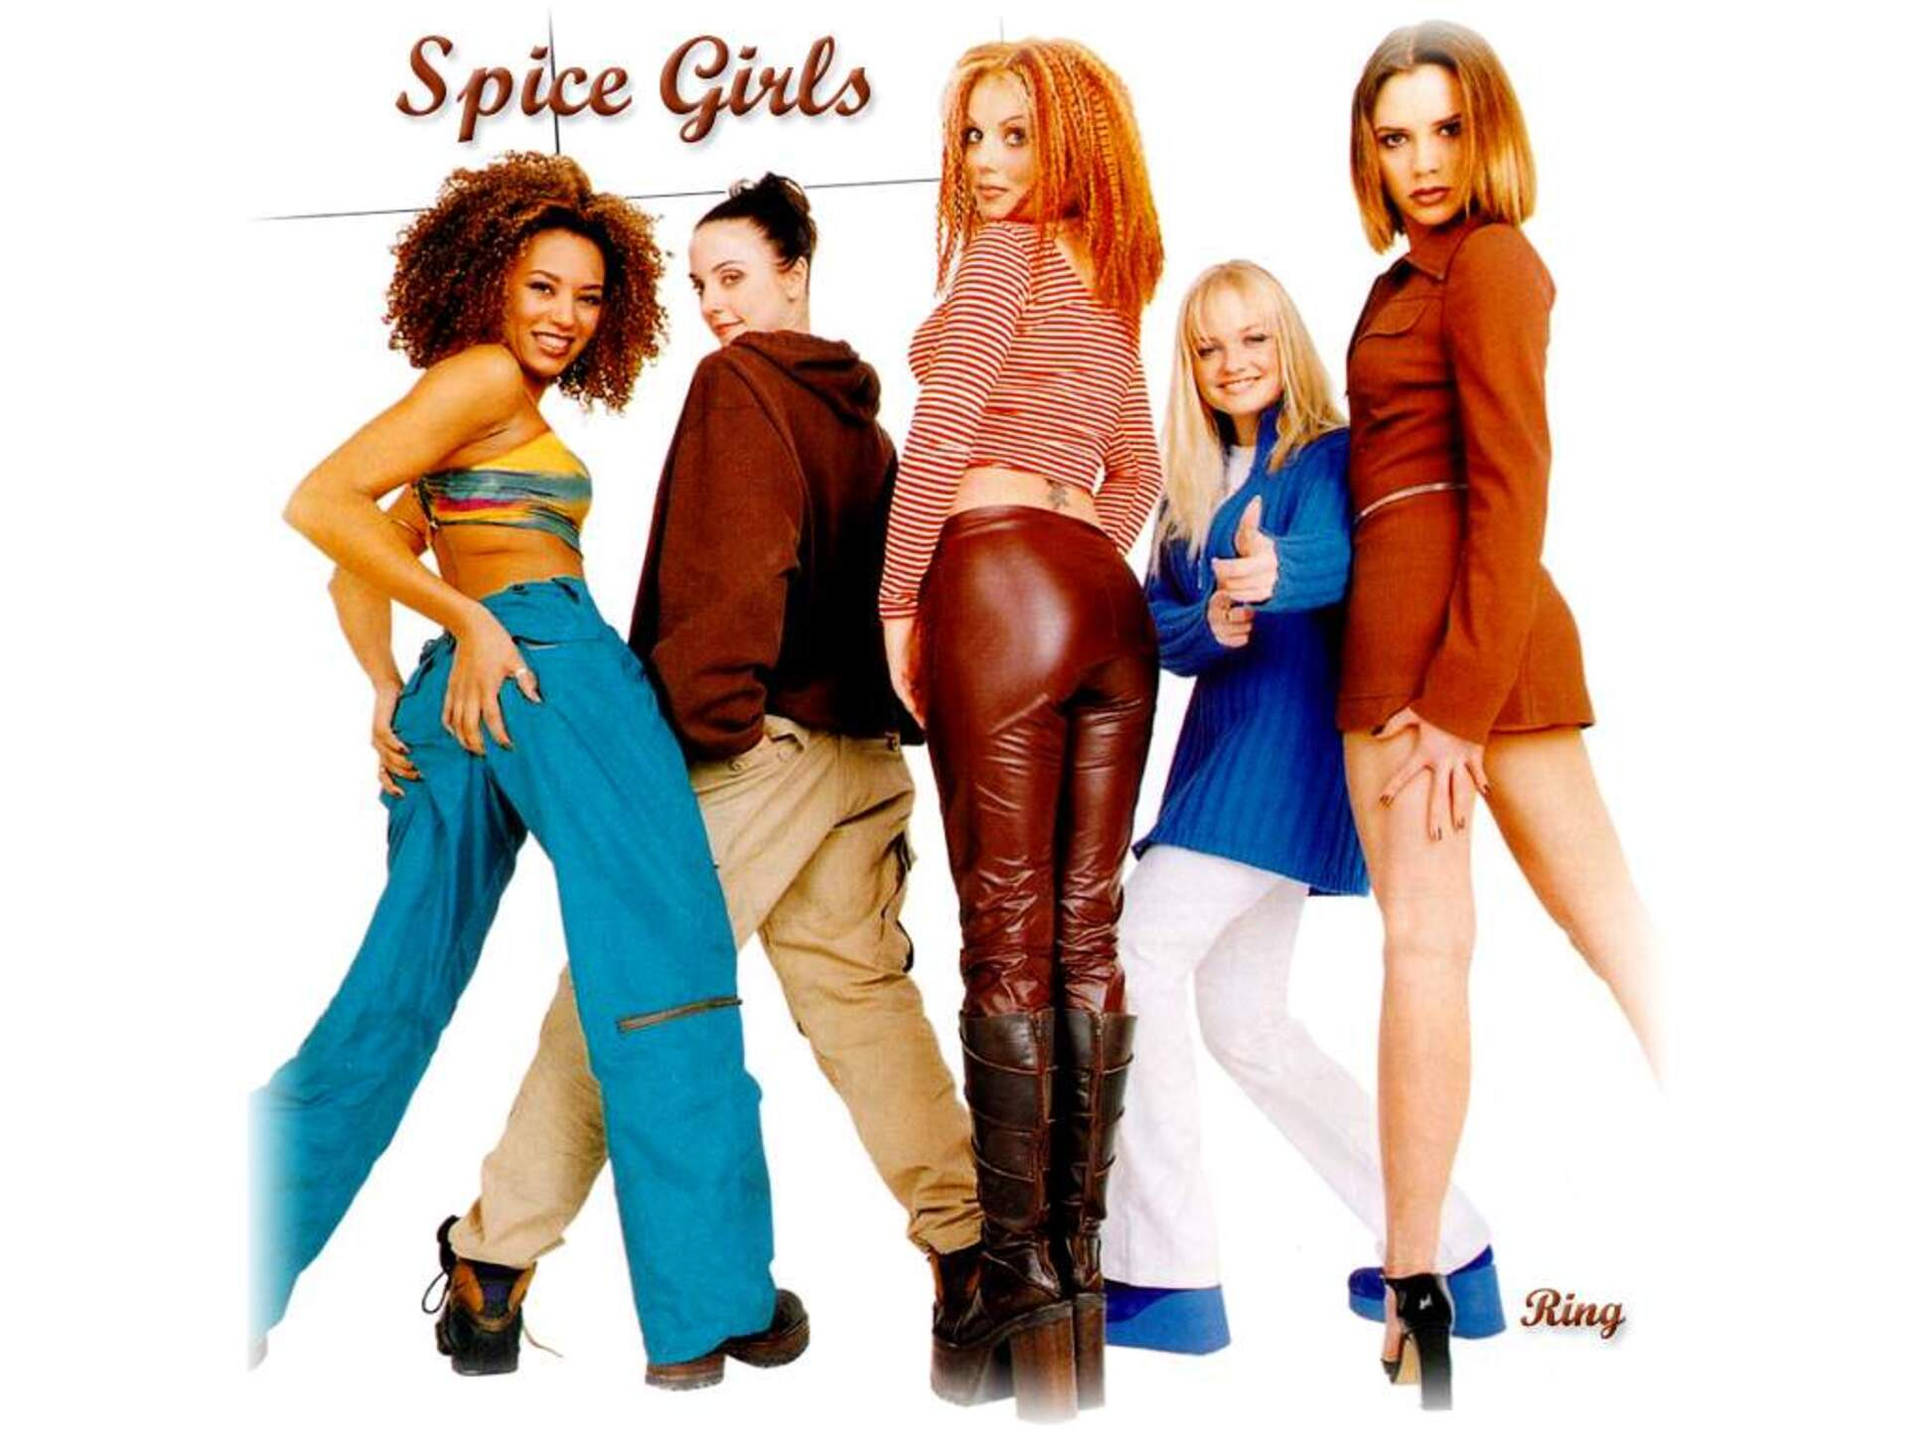 Spice Girls Pop Album Cover Background